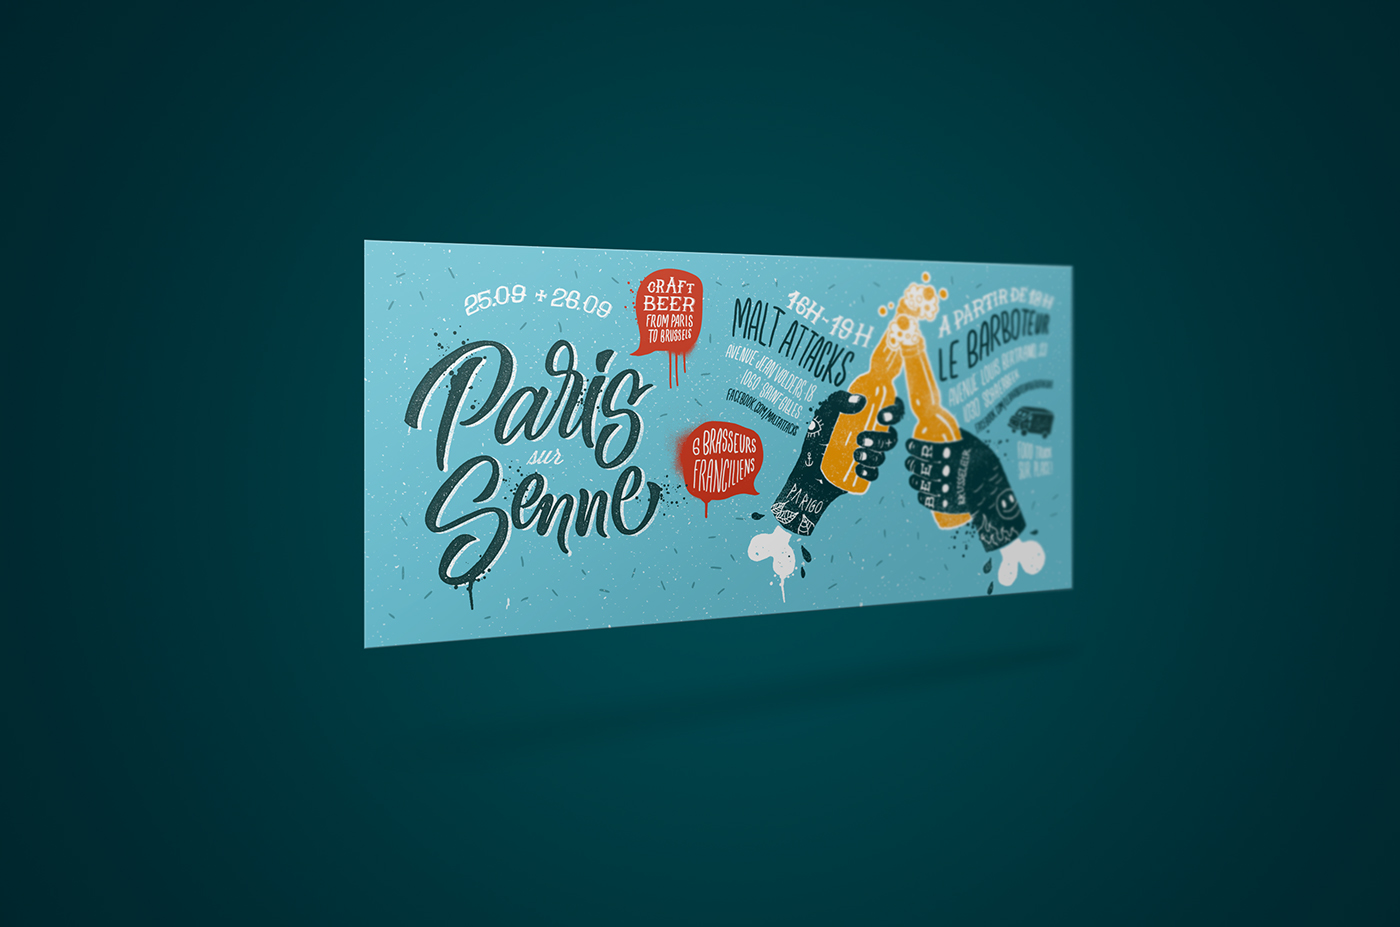 Paris sur Senne flyer poster beer craft discovery brussels tasting lettering handdrawn